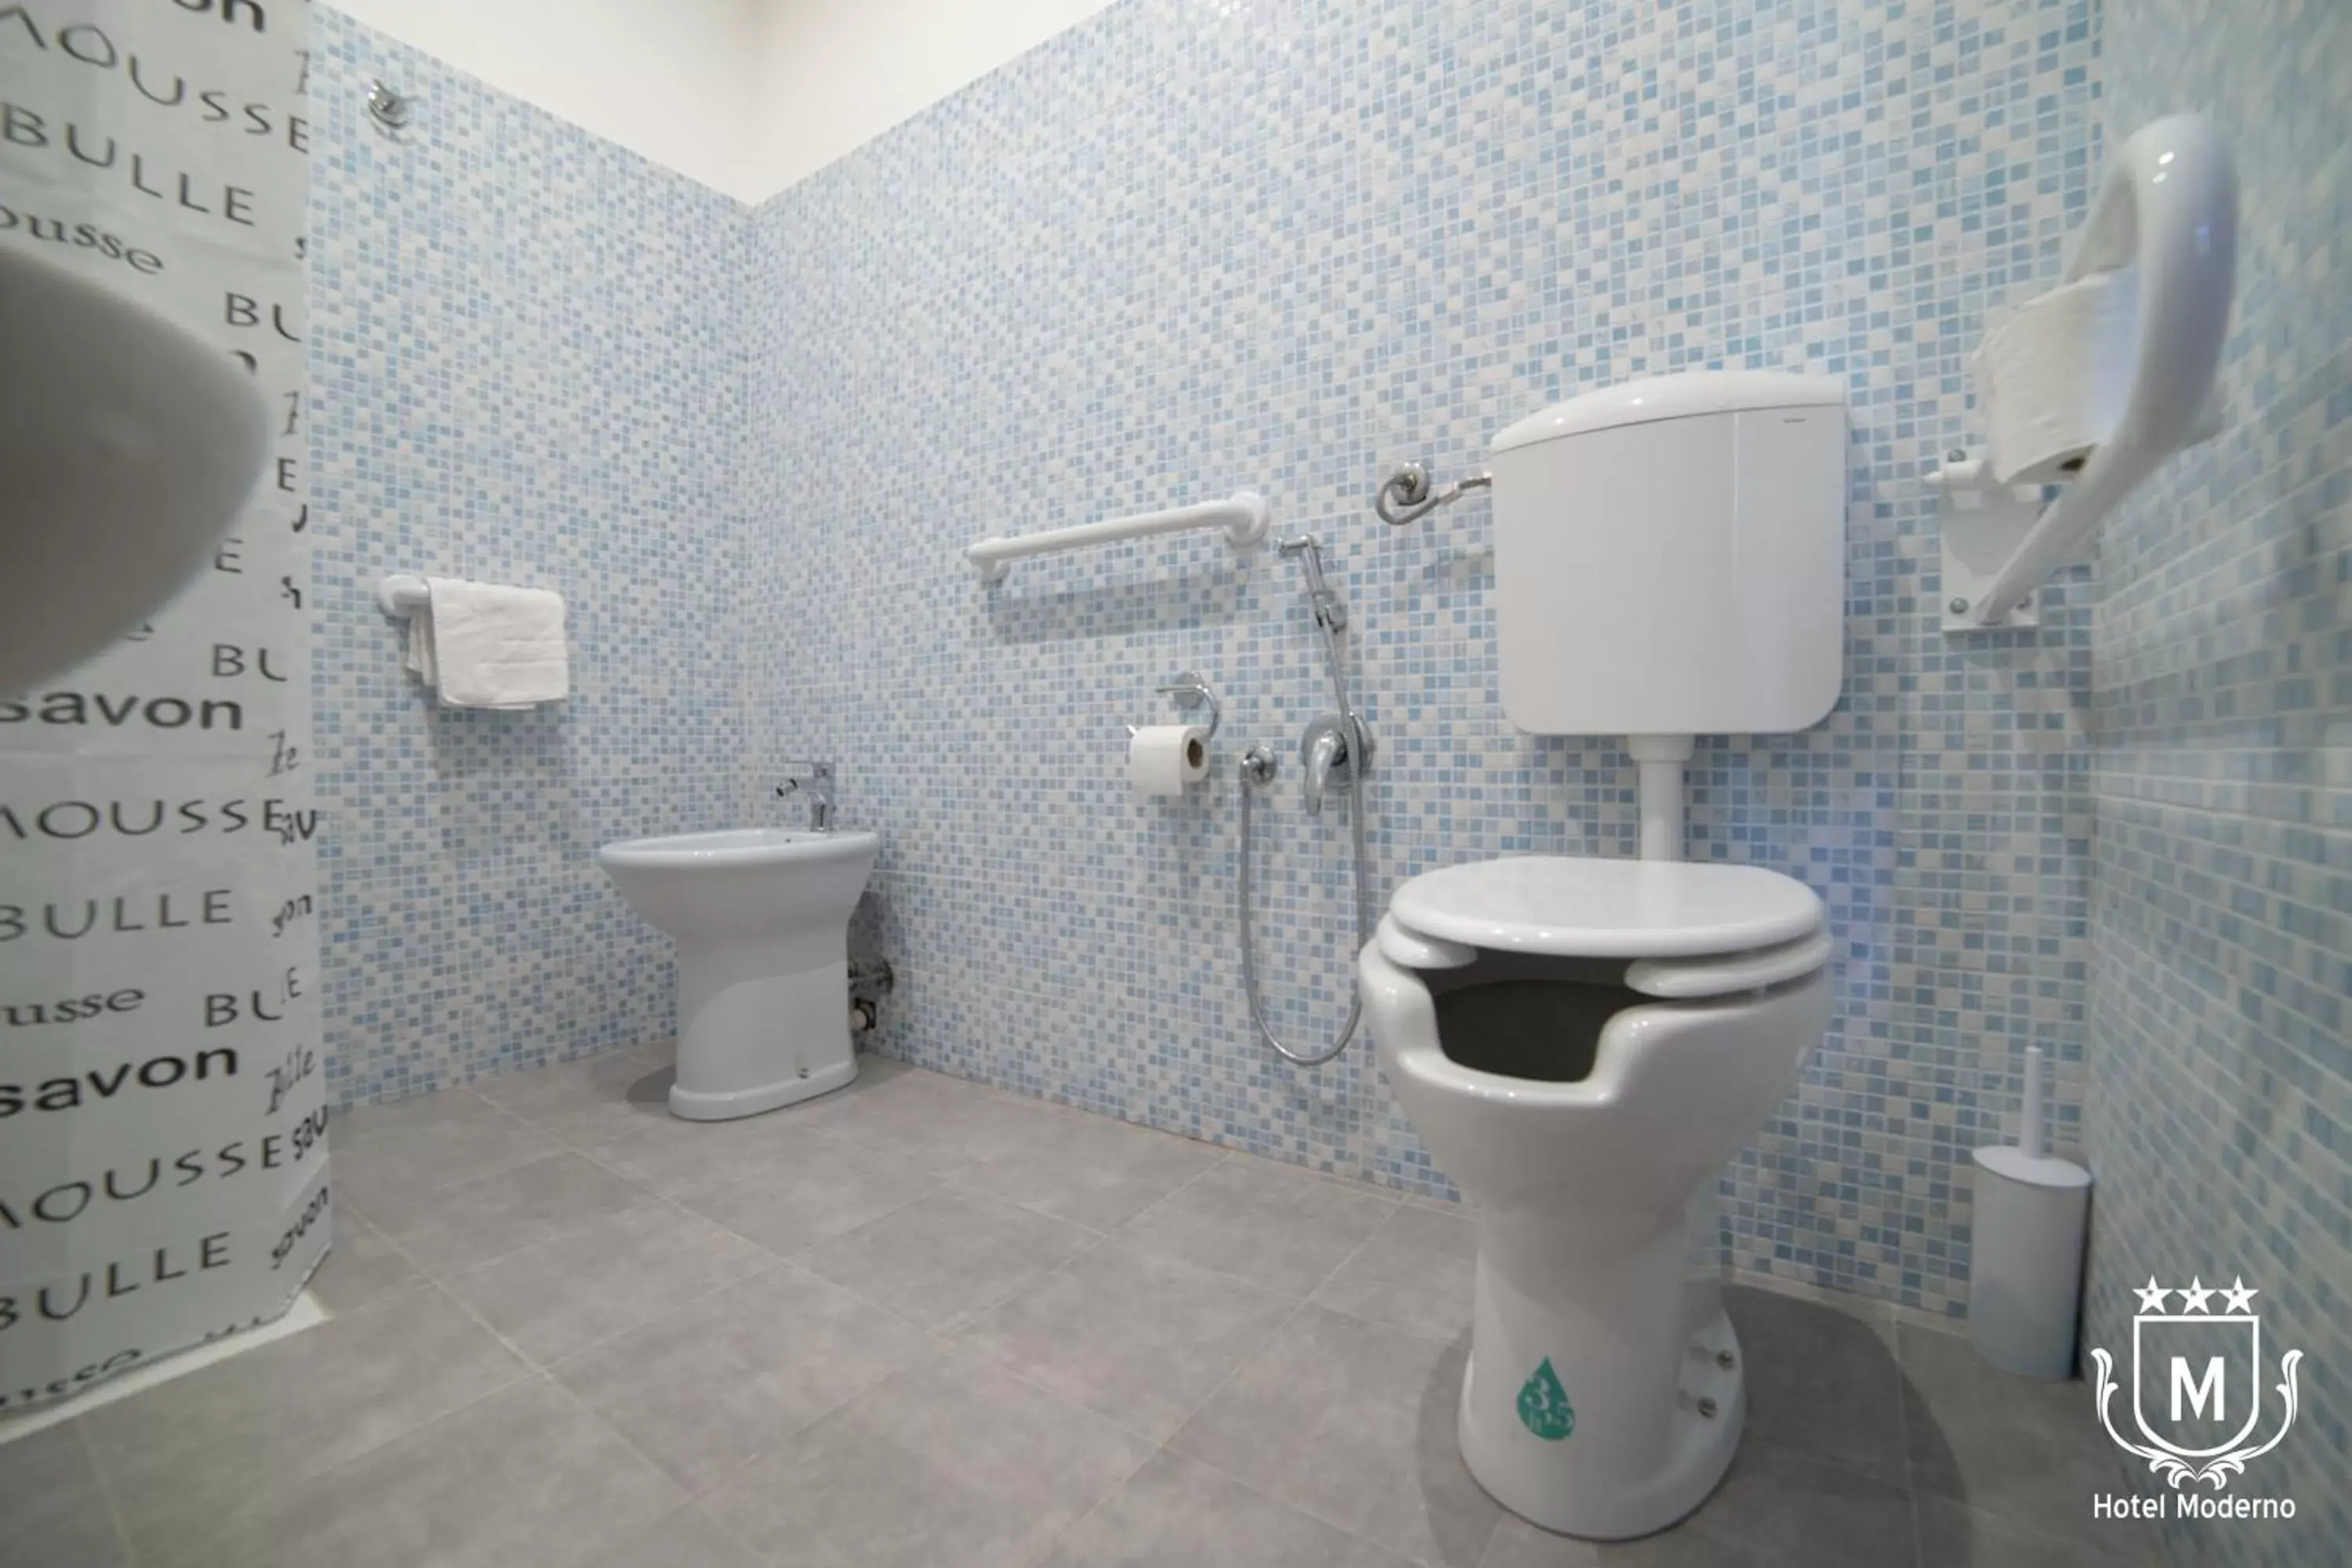 Toilet, Bathroom in Hotel Moderno